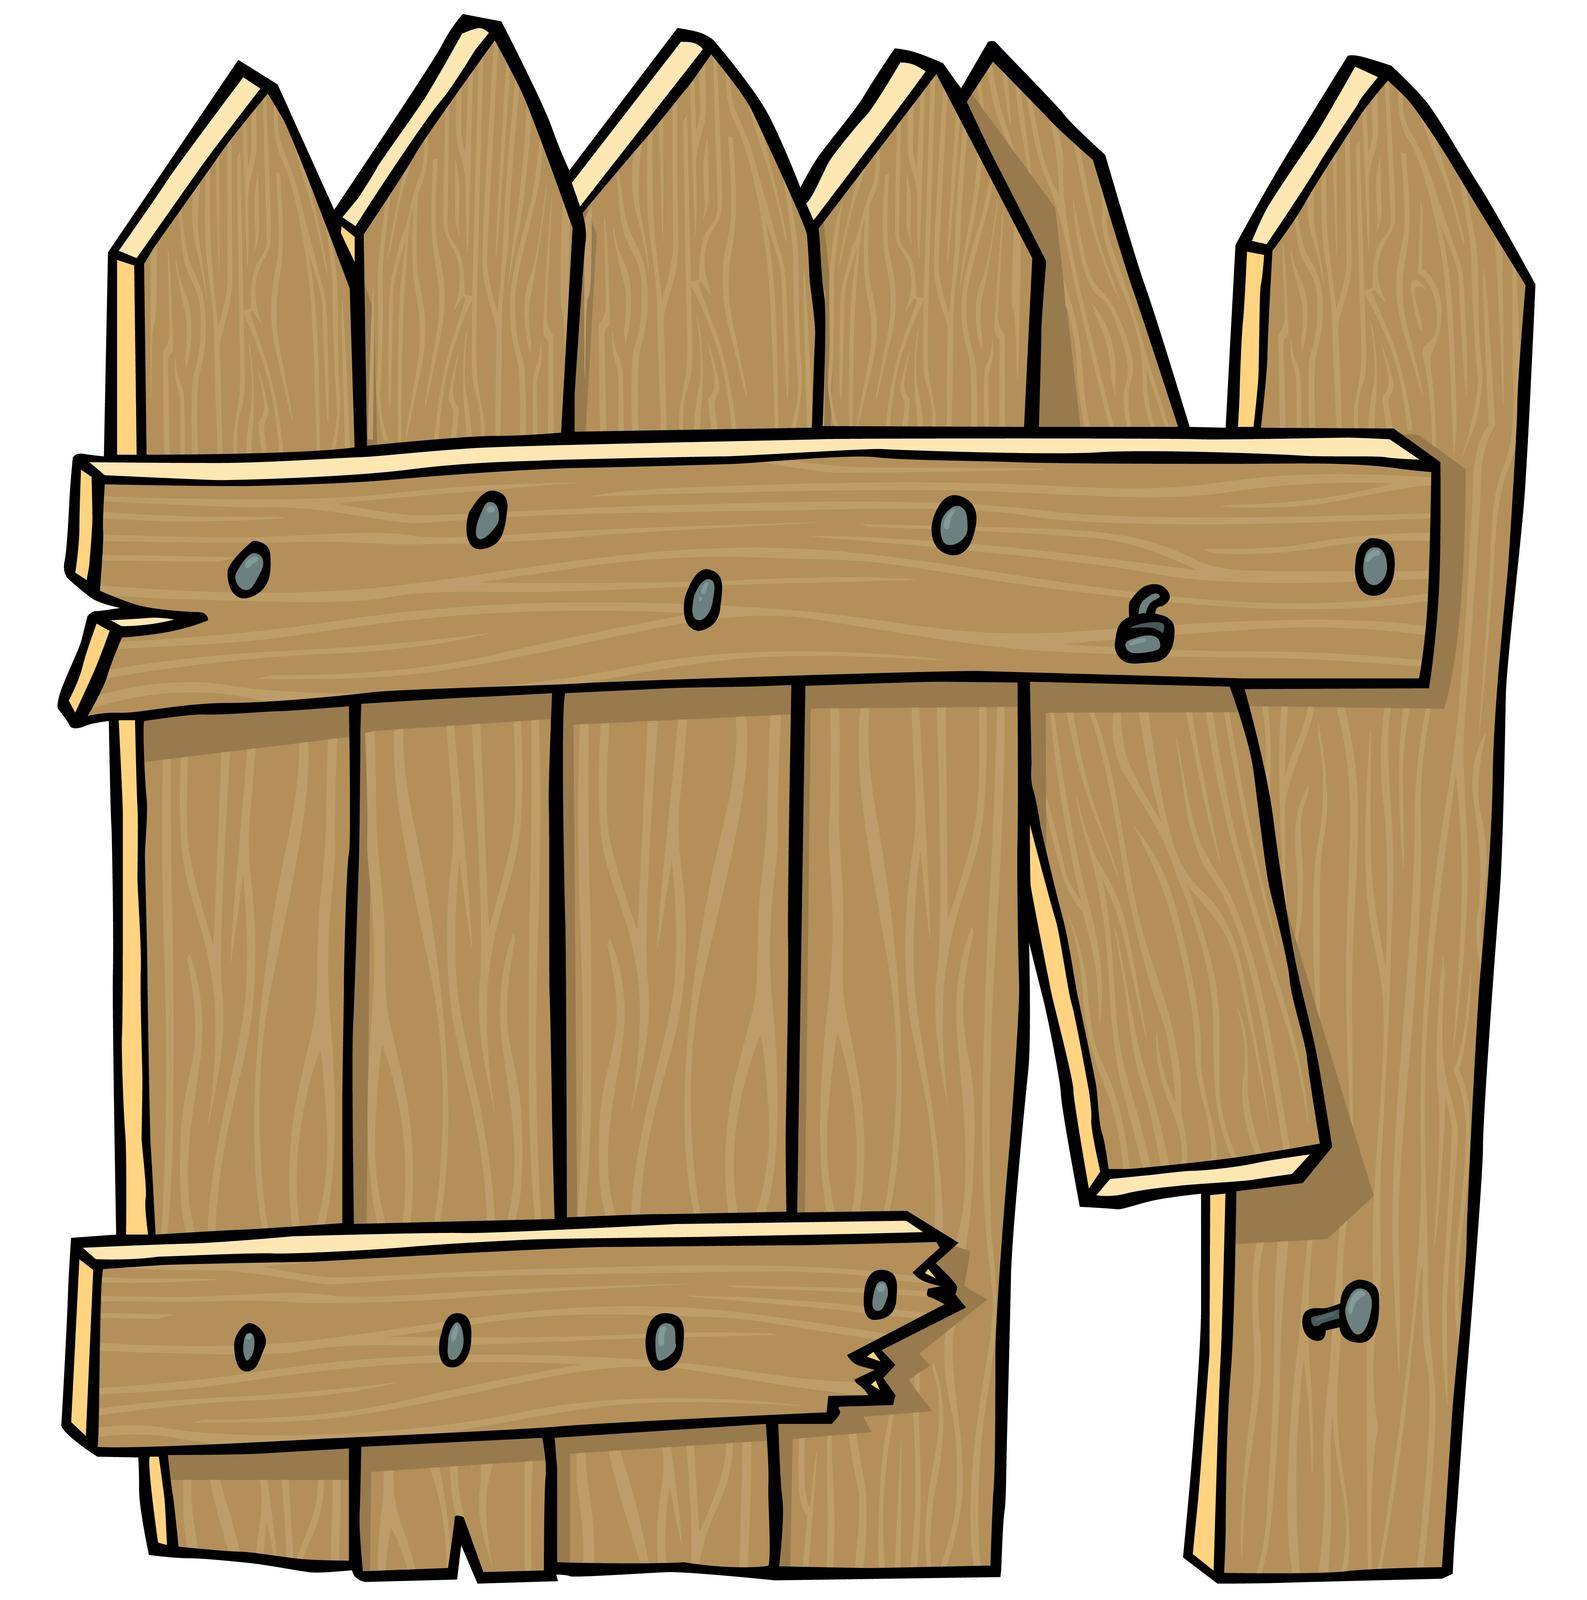 Wooden Fence by illustratorCZ